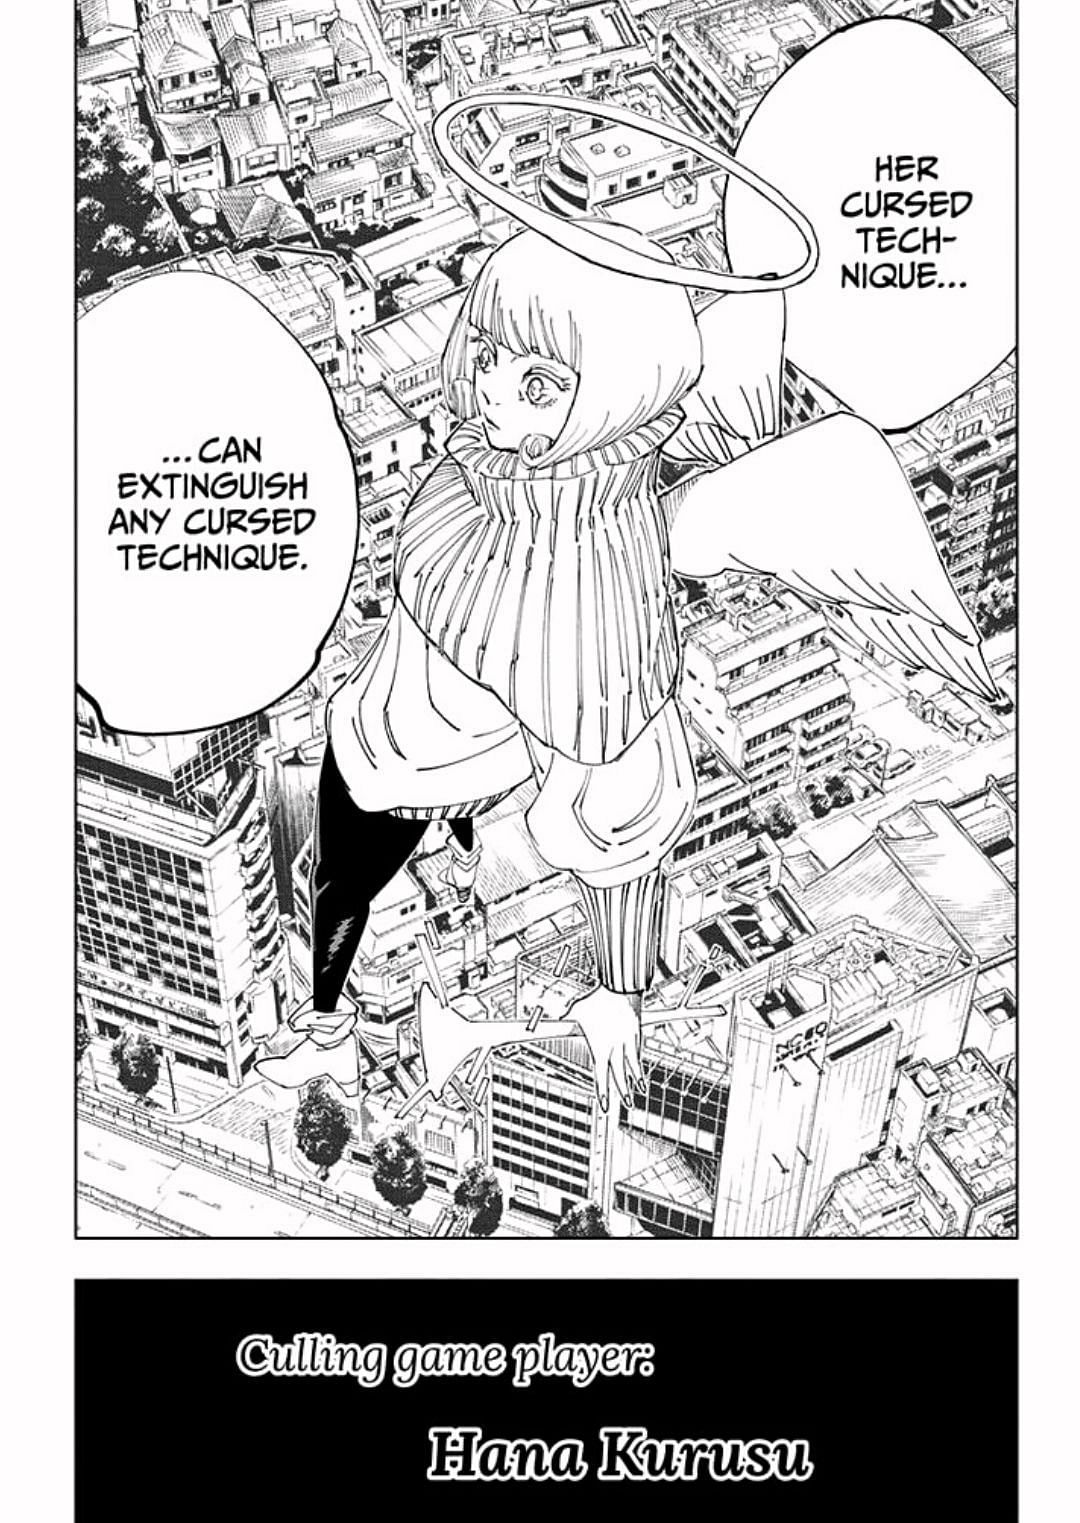 Hana Kurusu being introduced in the Jujutsu Kaisen Manga (Image via Gege Akutami)